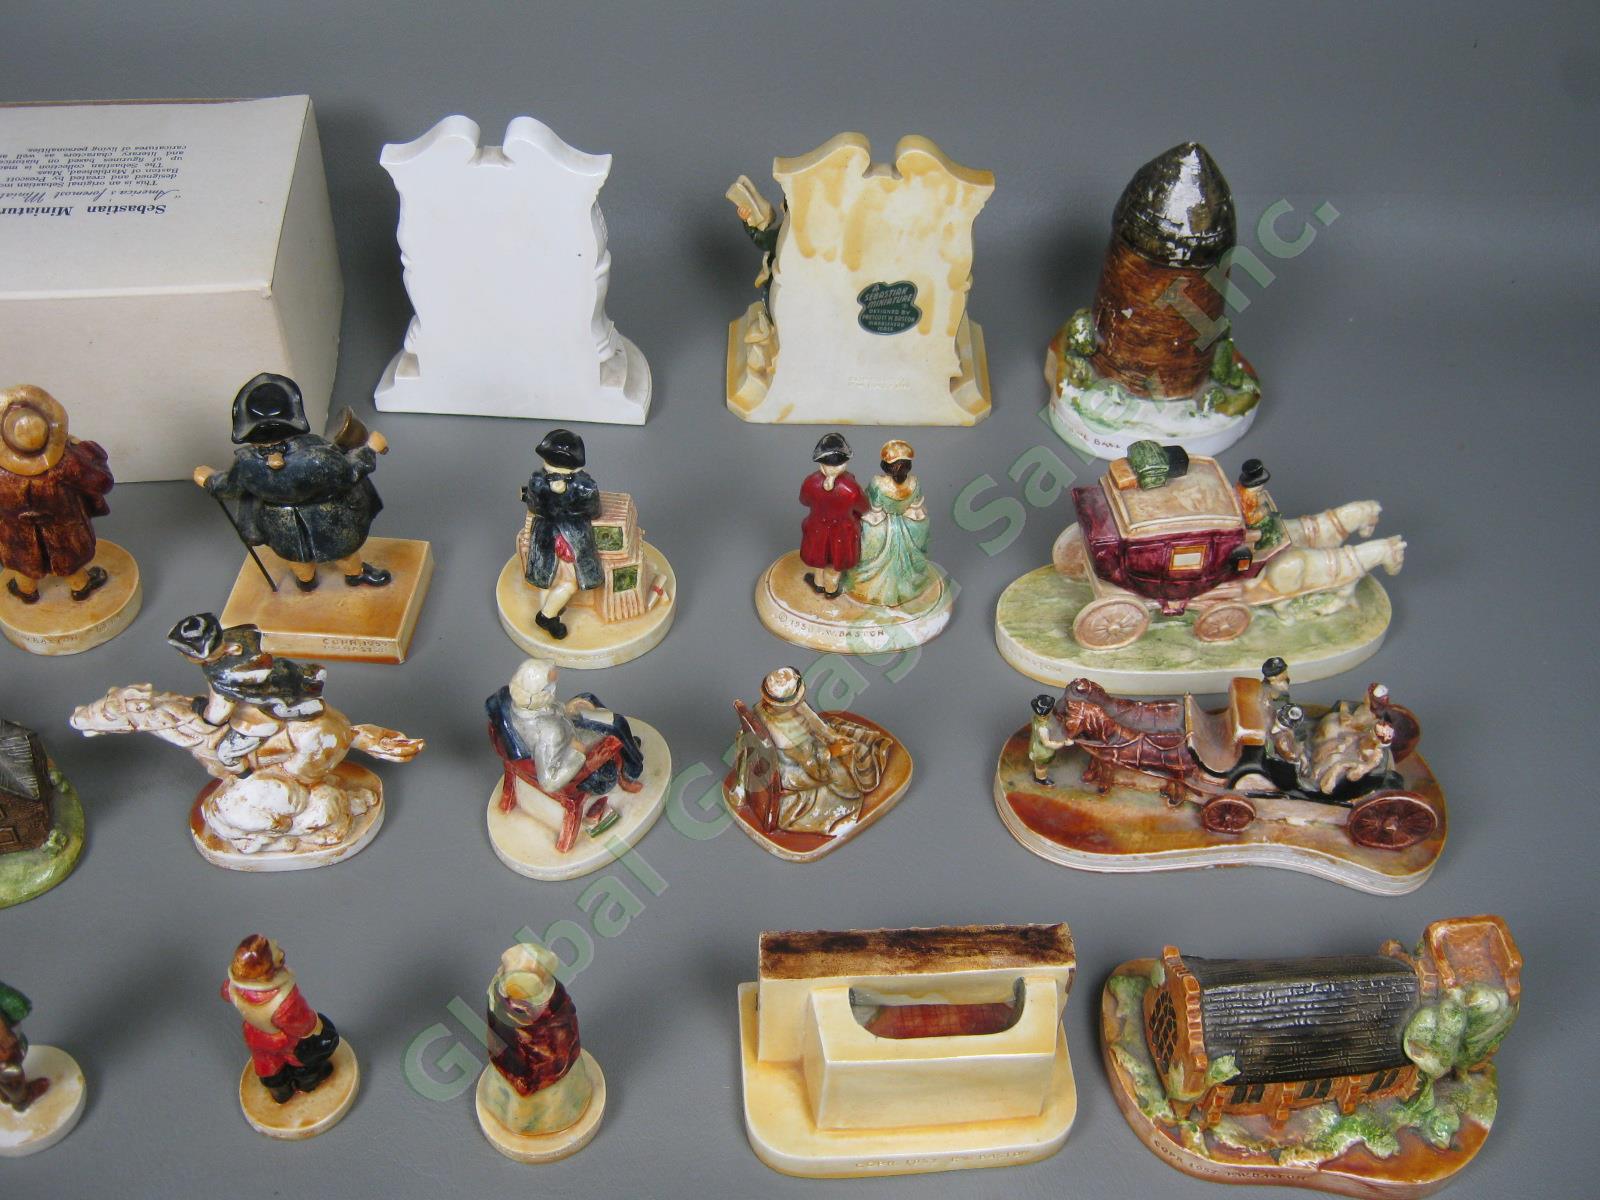 45 Vtg 1940s Sebastian Miniatures Figurines Collection Lot Collector